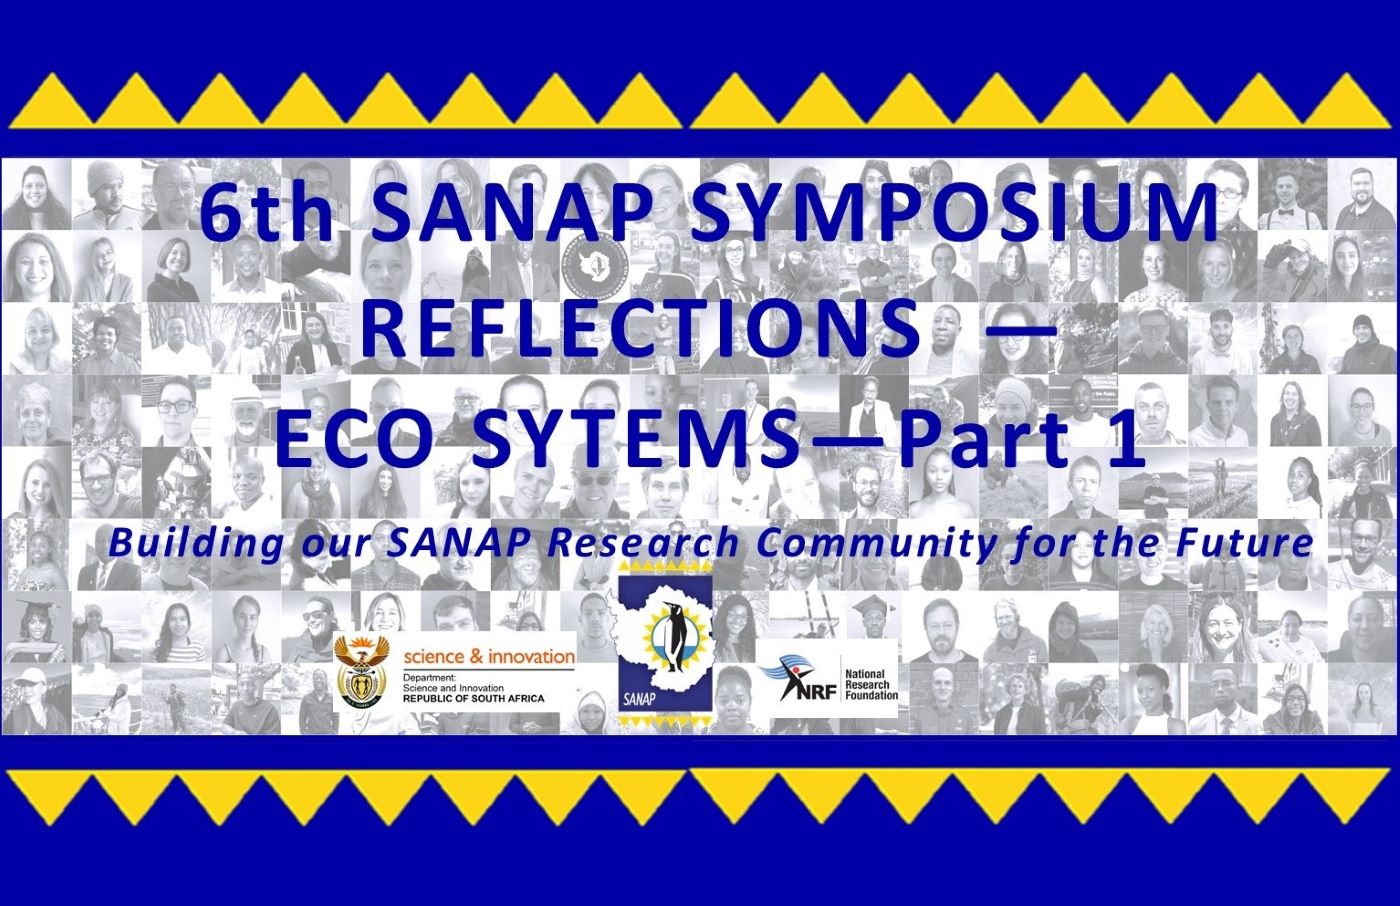 6 SANAP symposium Reflections: Ecosystems part 1